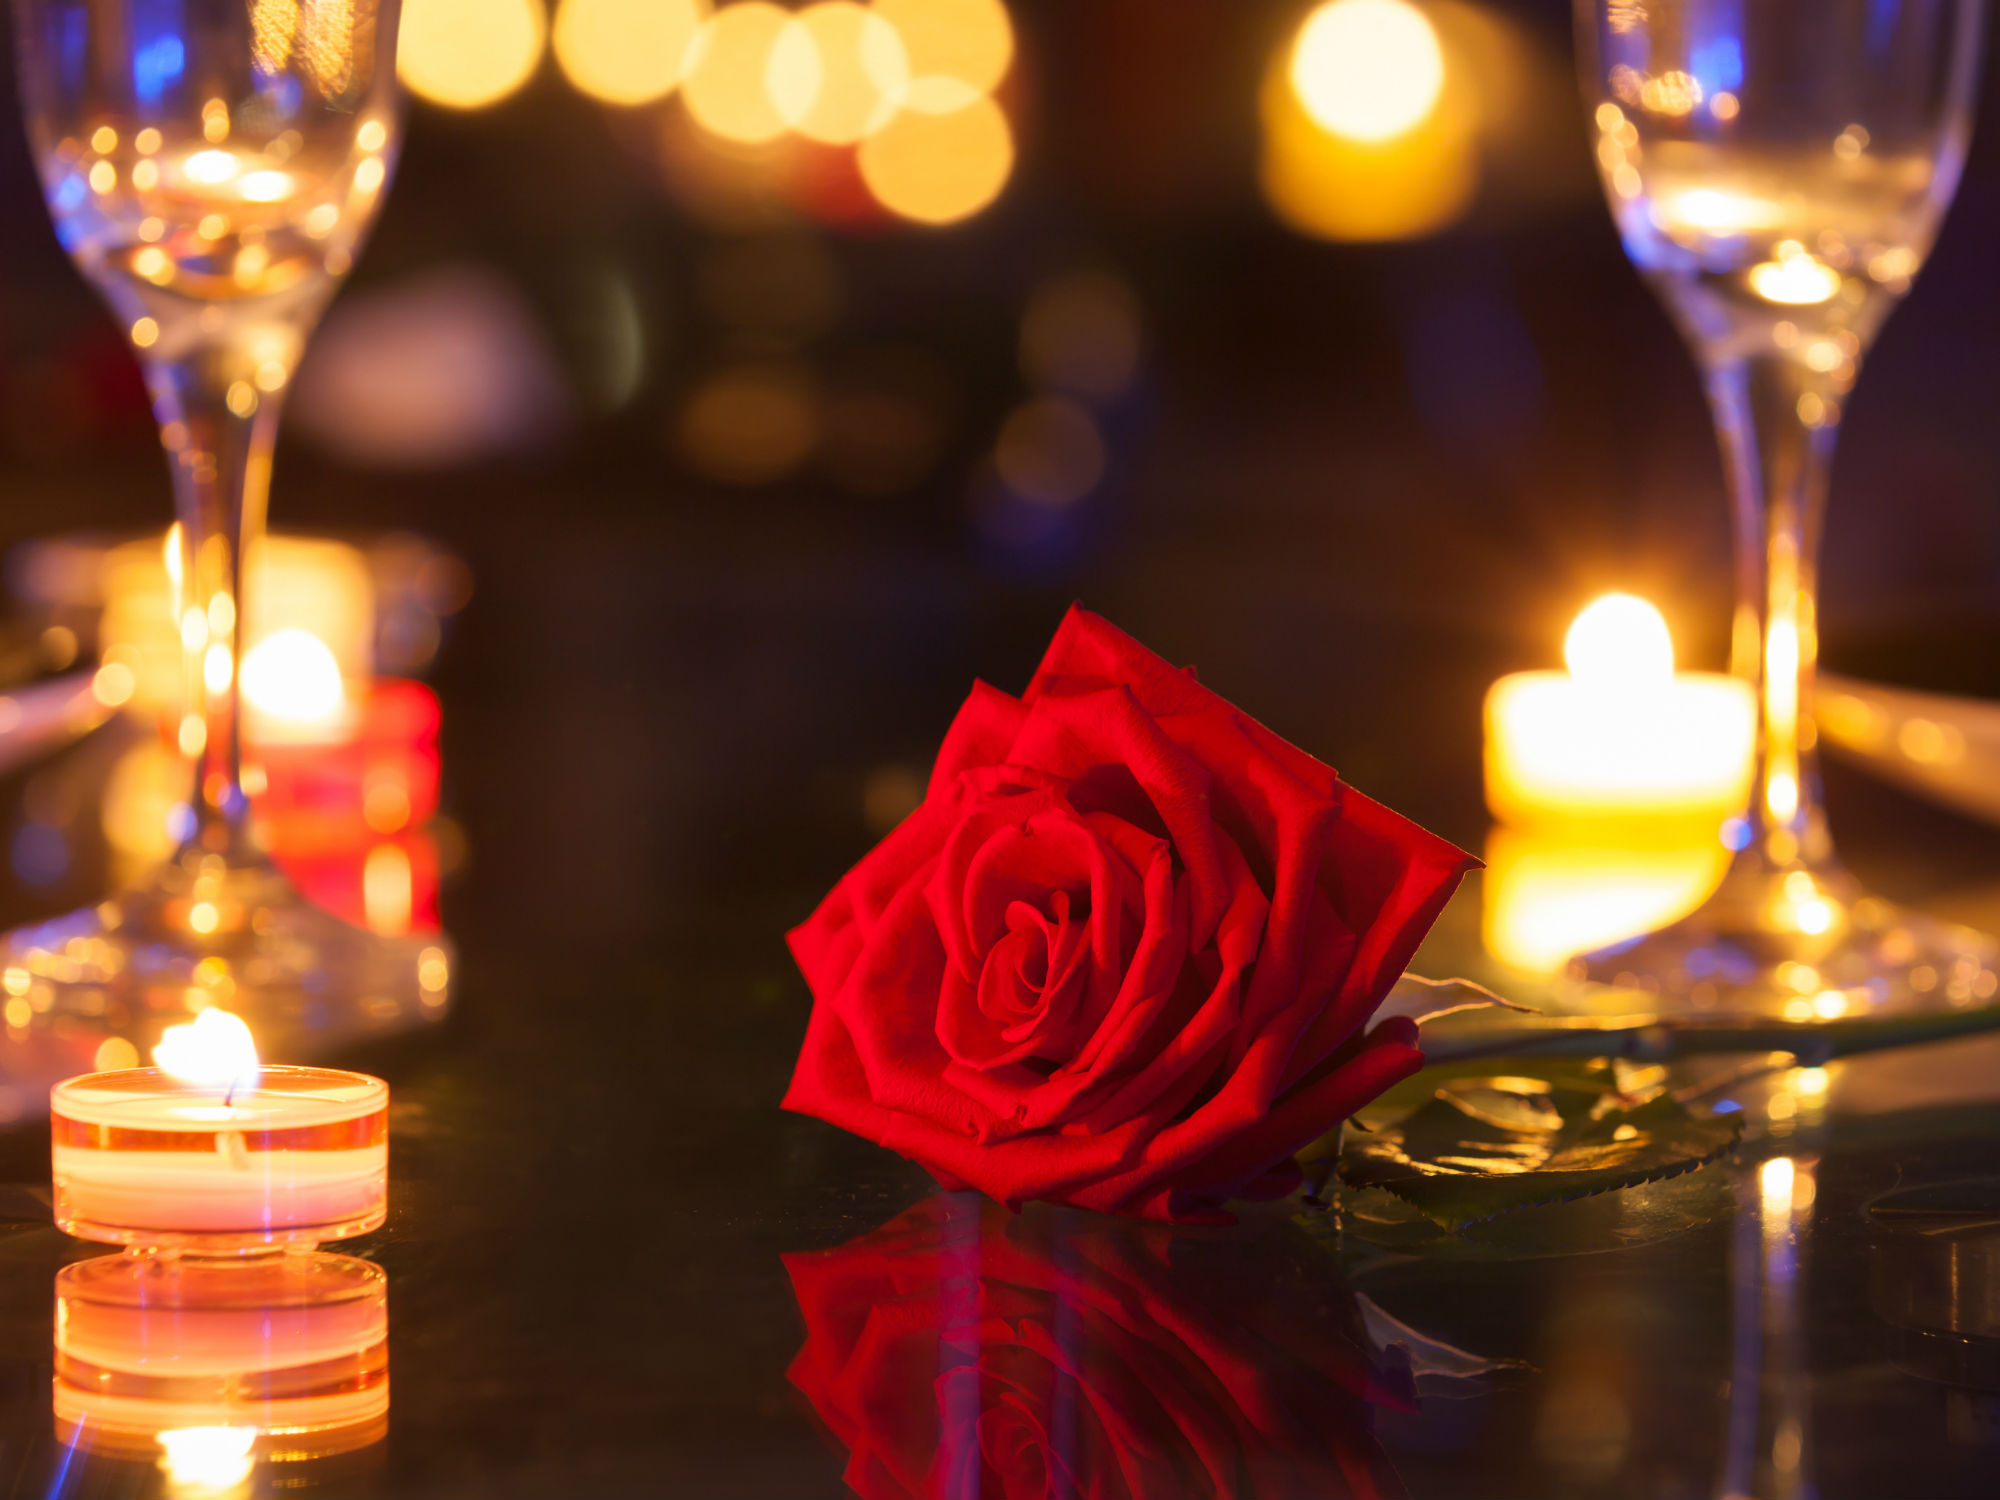 the rose of romantic love